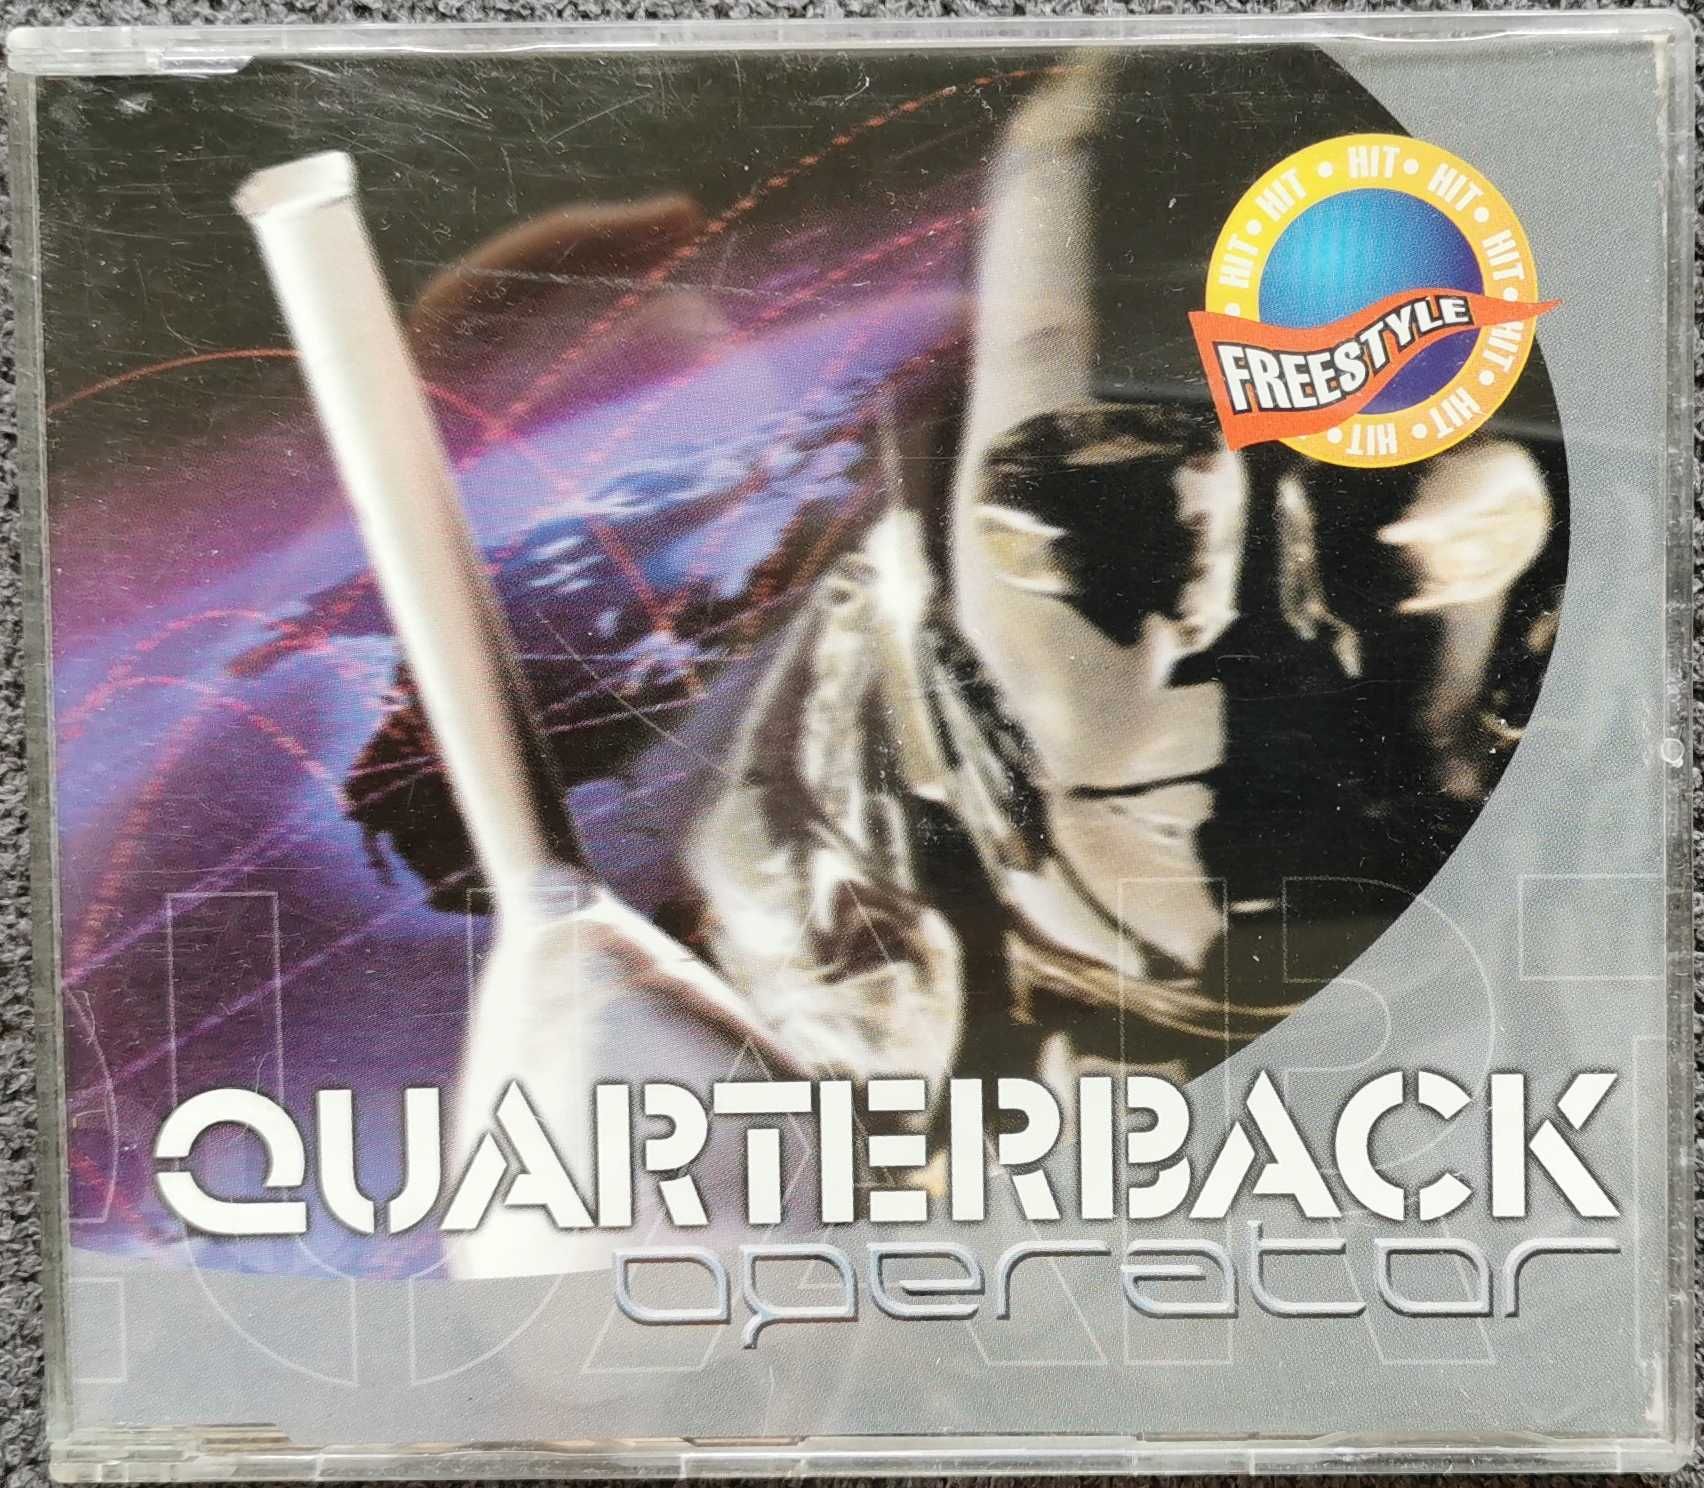 Quarterback - Operator (1998)